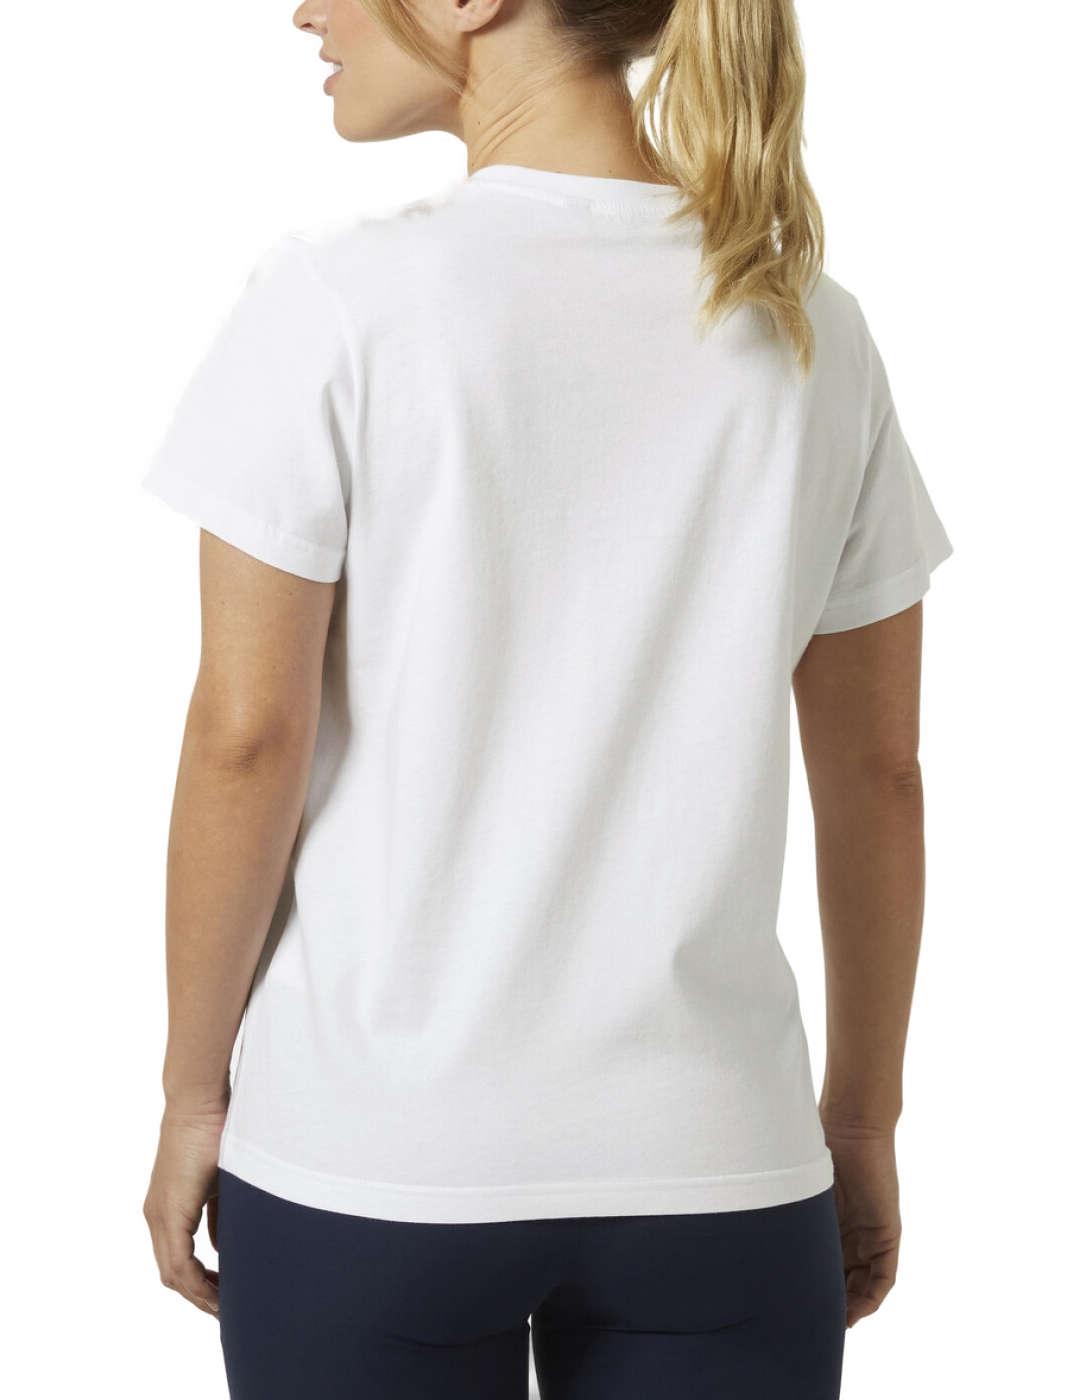 Camiseta Helly Hansen Logo blanca manga corta para mujer